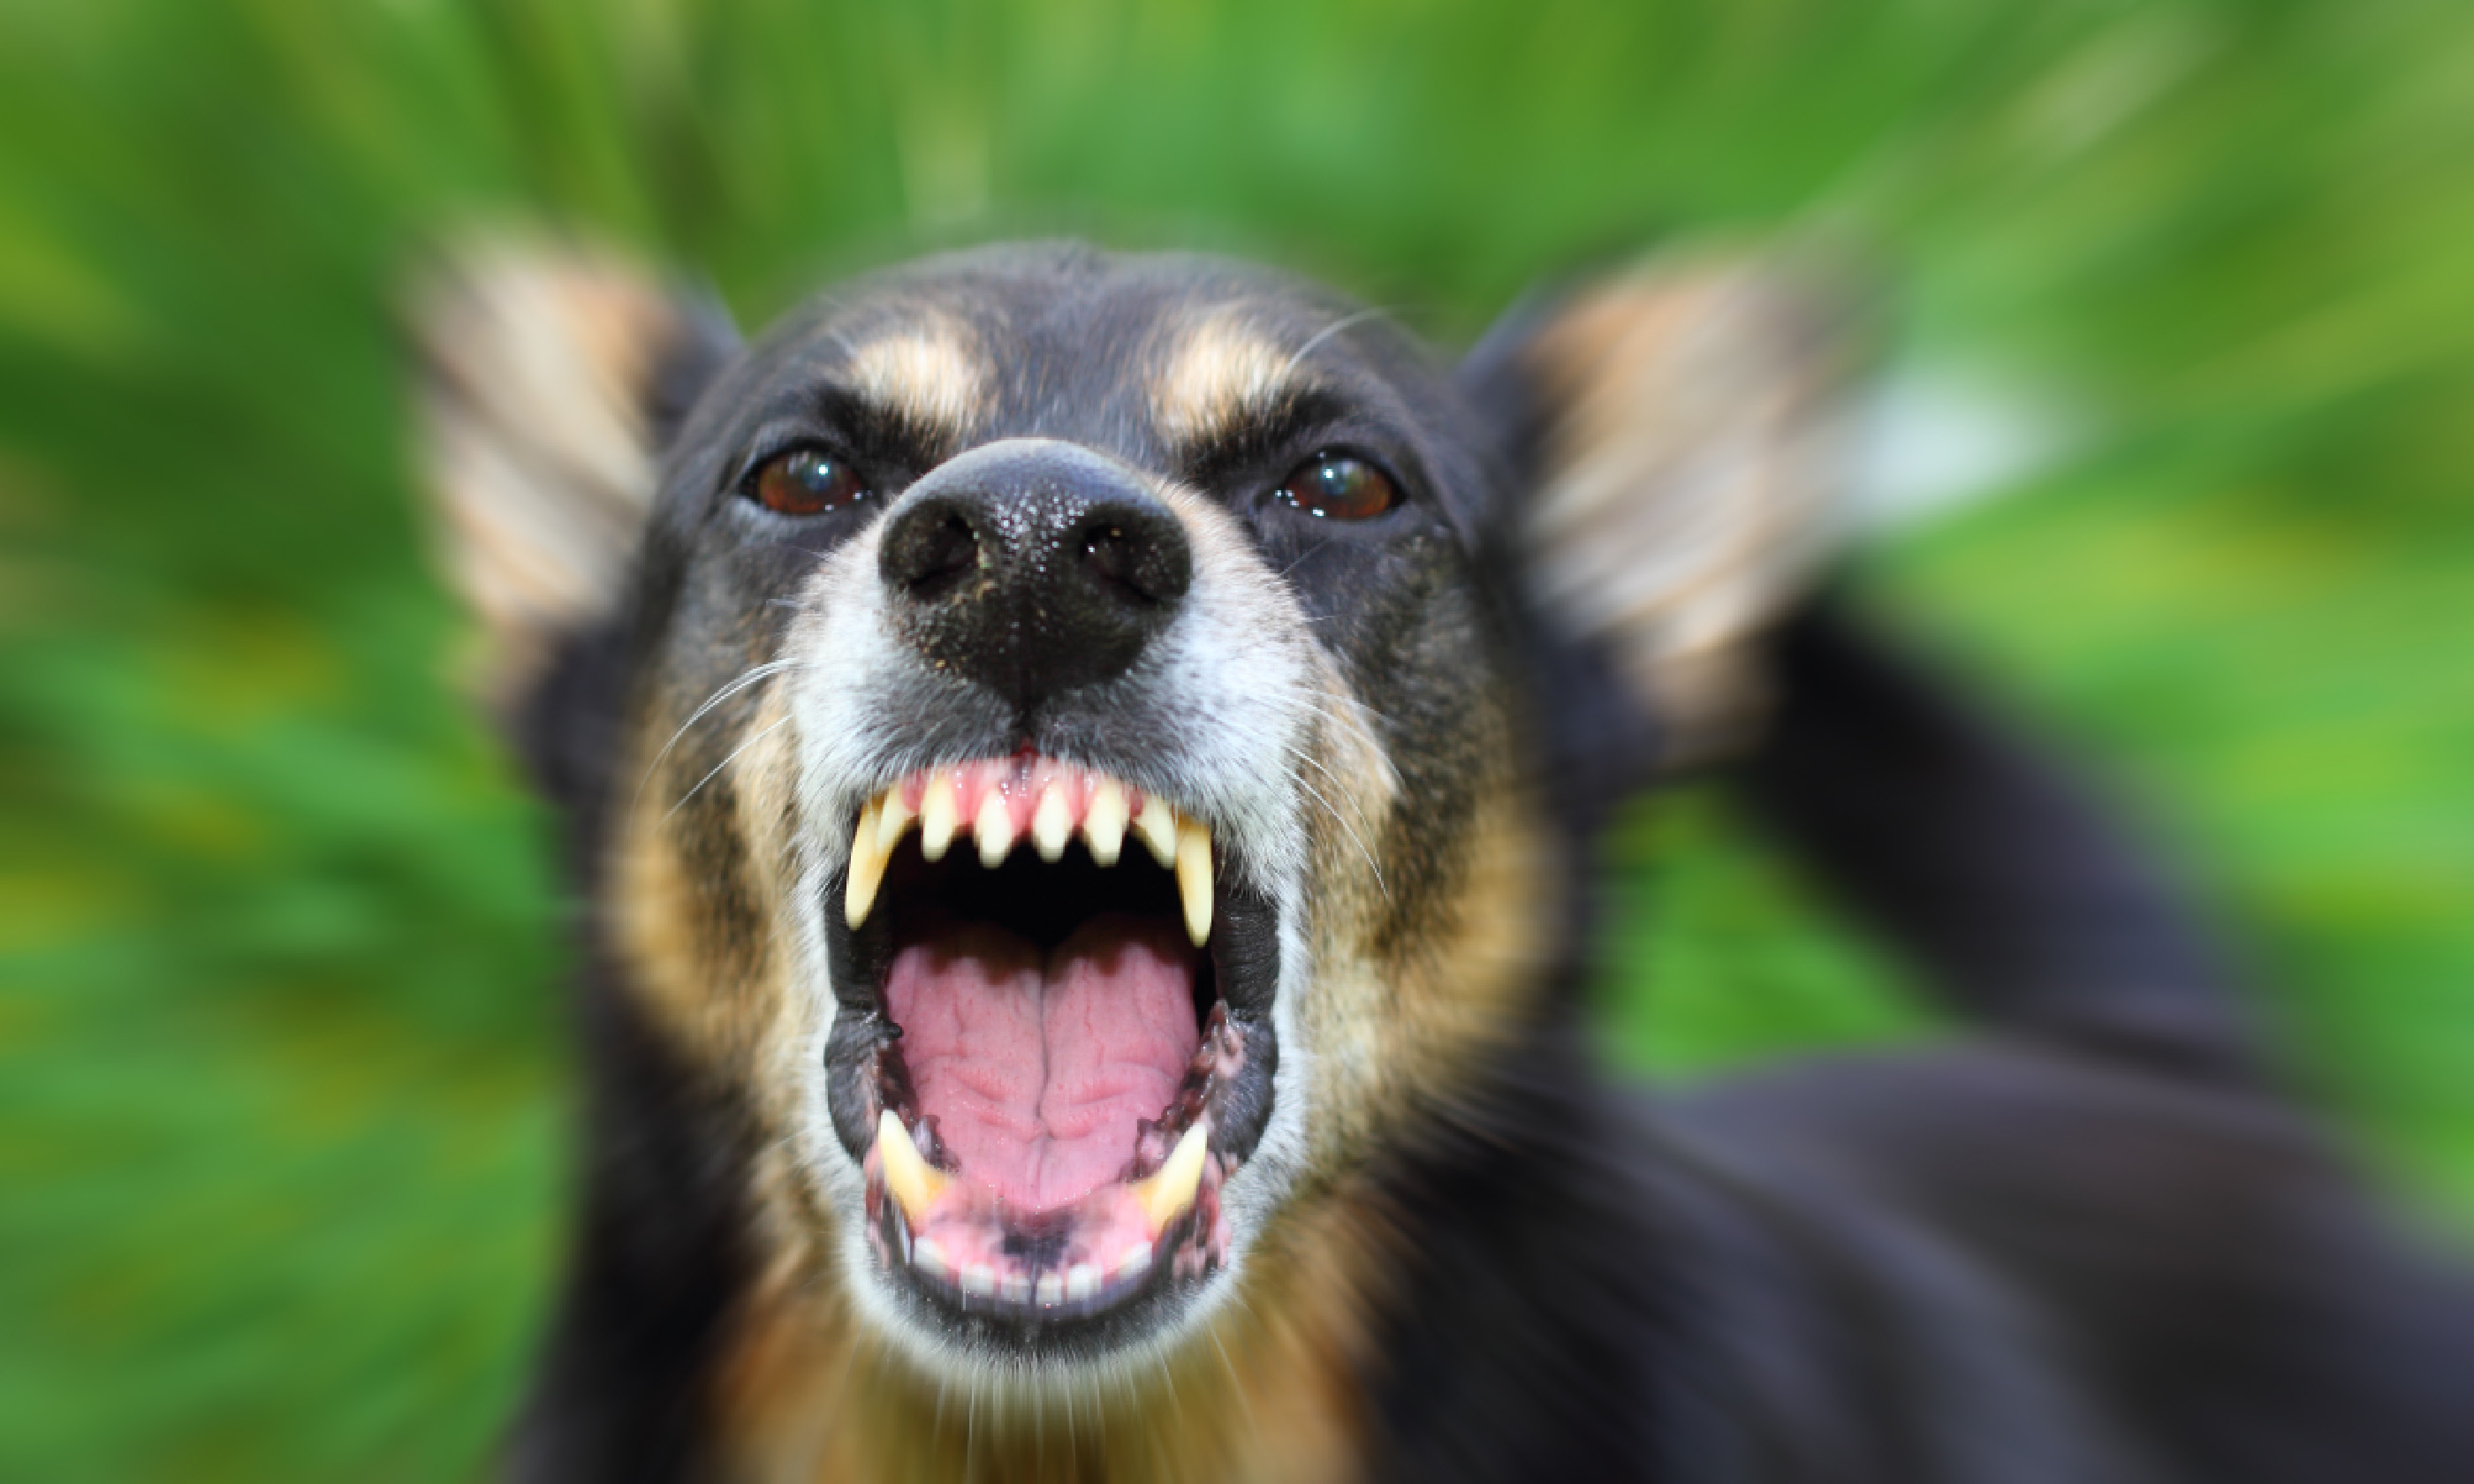 Enraged dog (Shutterstock: see credit below)